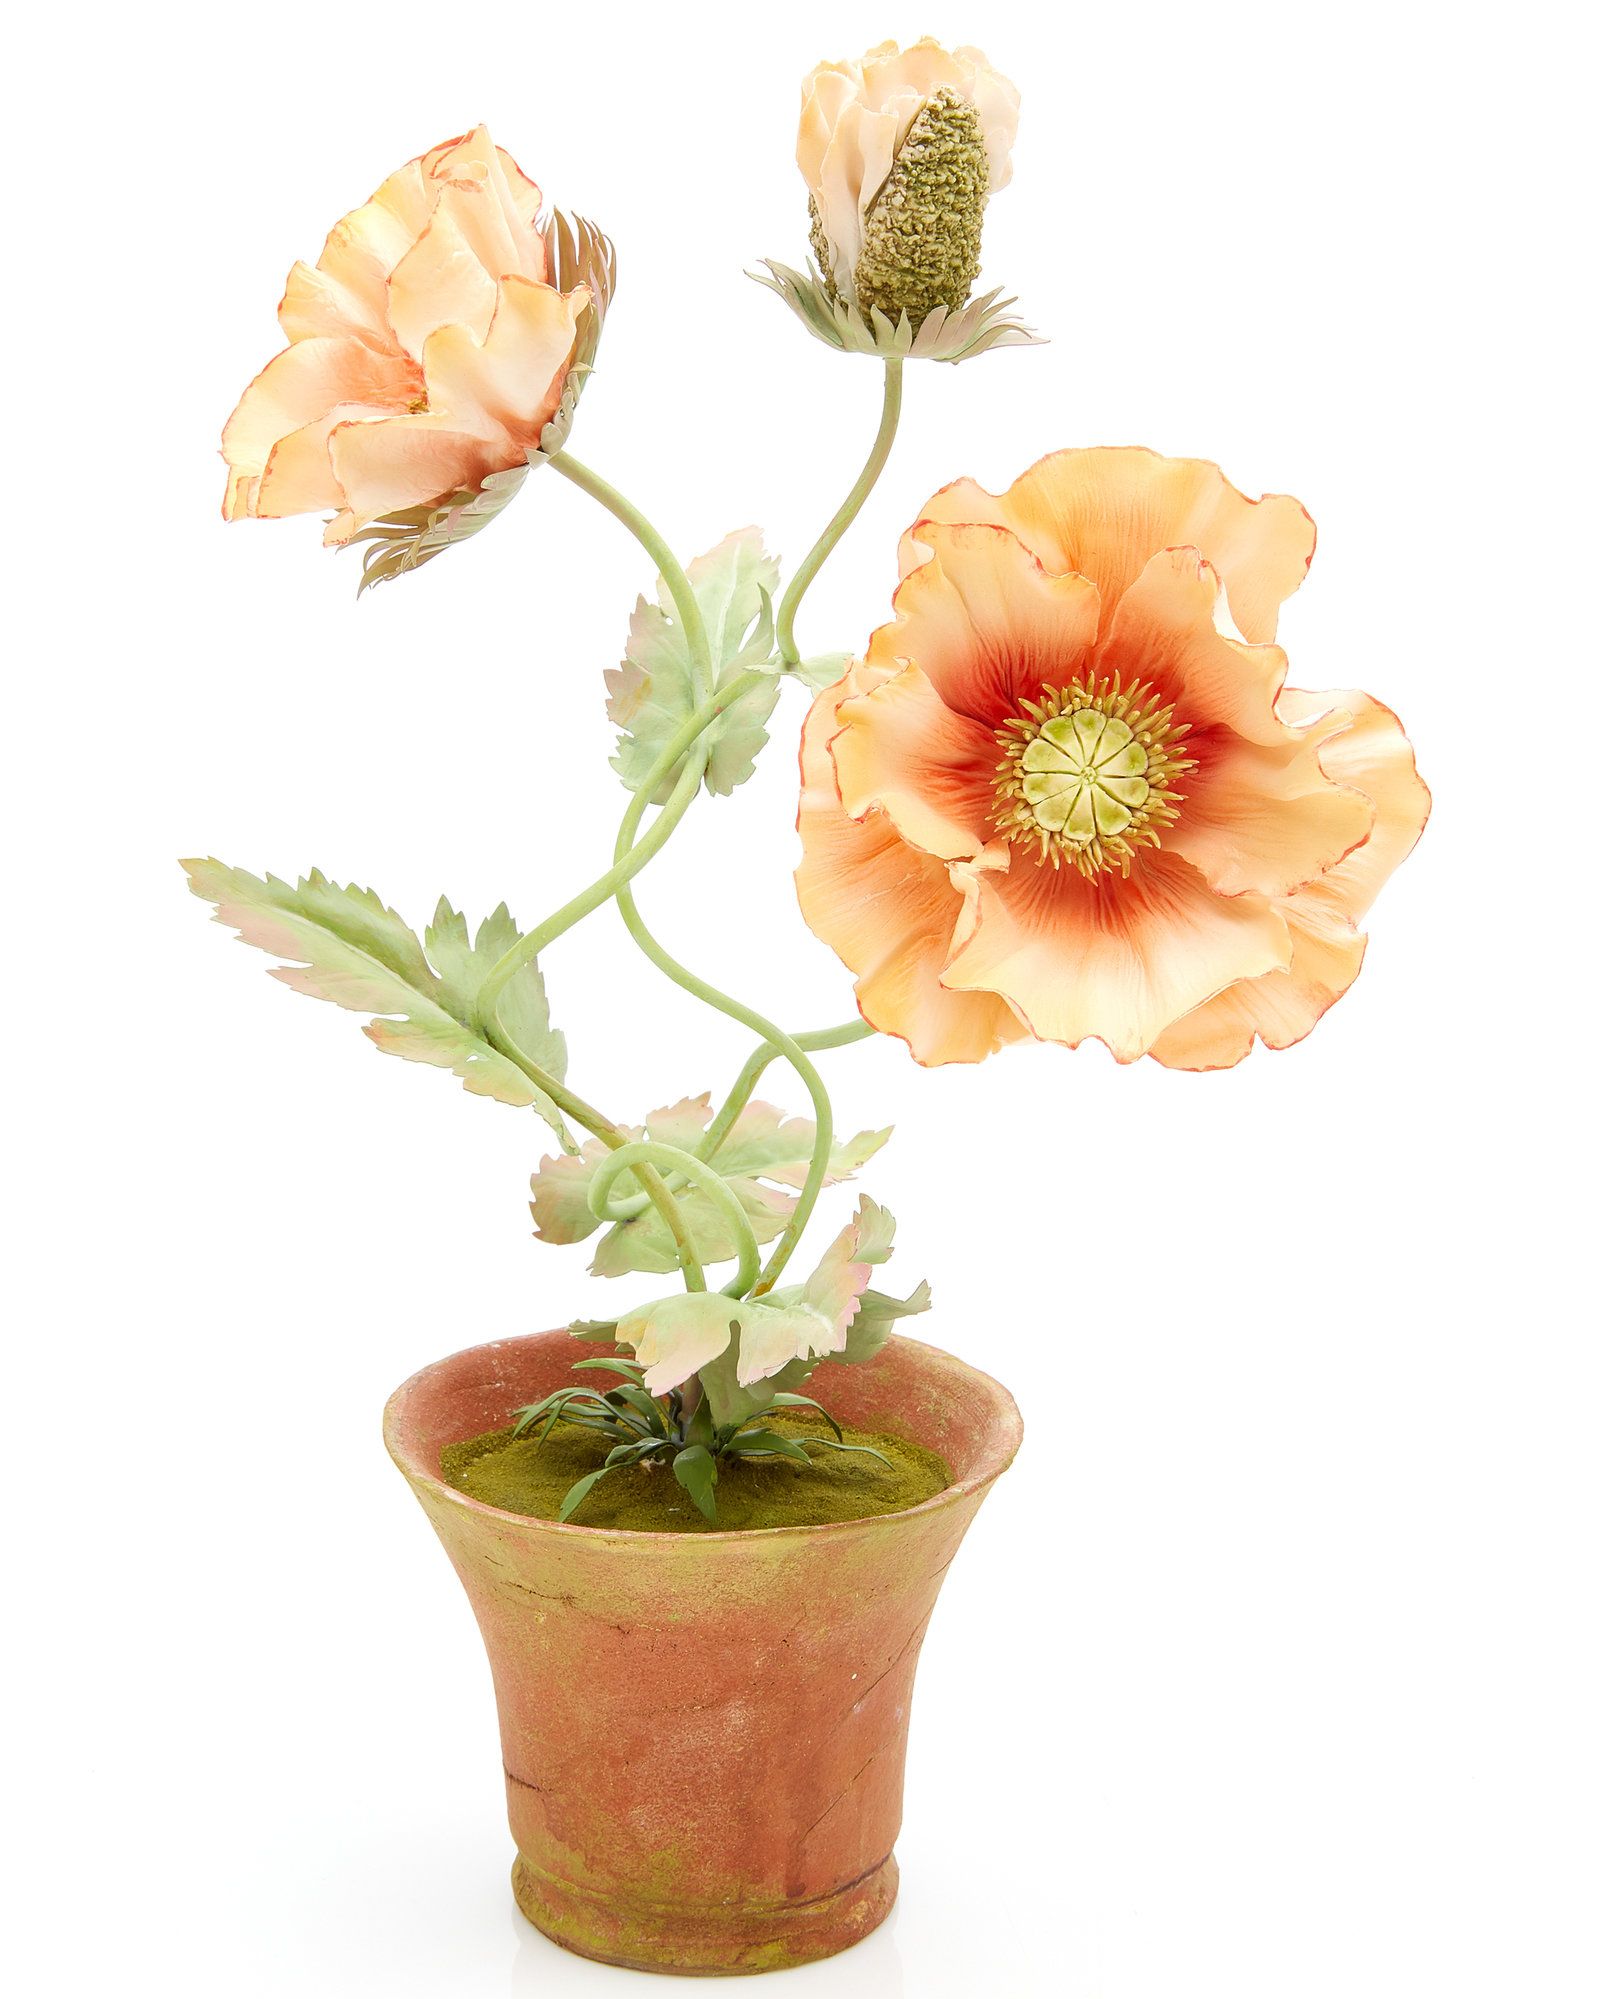 https://hips.hearstapps.com/vader-prod.s3.amazonaws.com/1590512377-large_vladimir-kanevsky-orange-poppy-1-flower-1-bud.jpg?crop=1.00xw:0.781xh;0,0.175xh